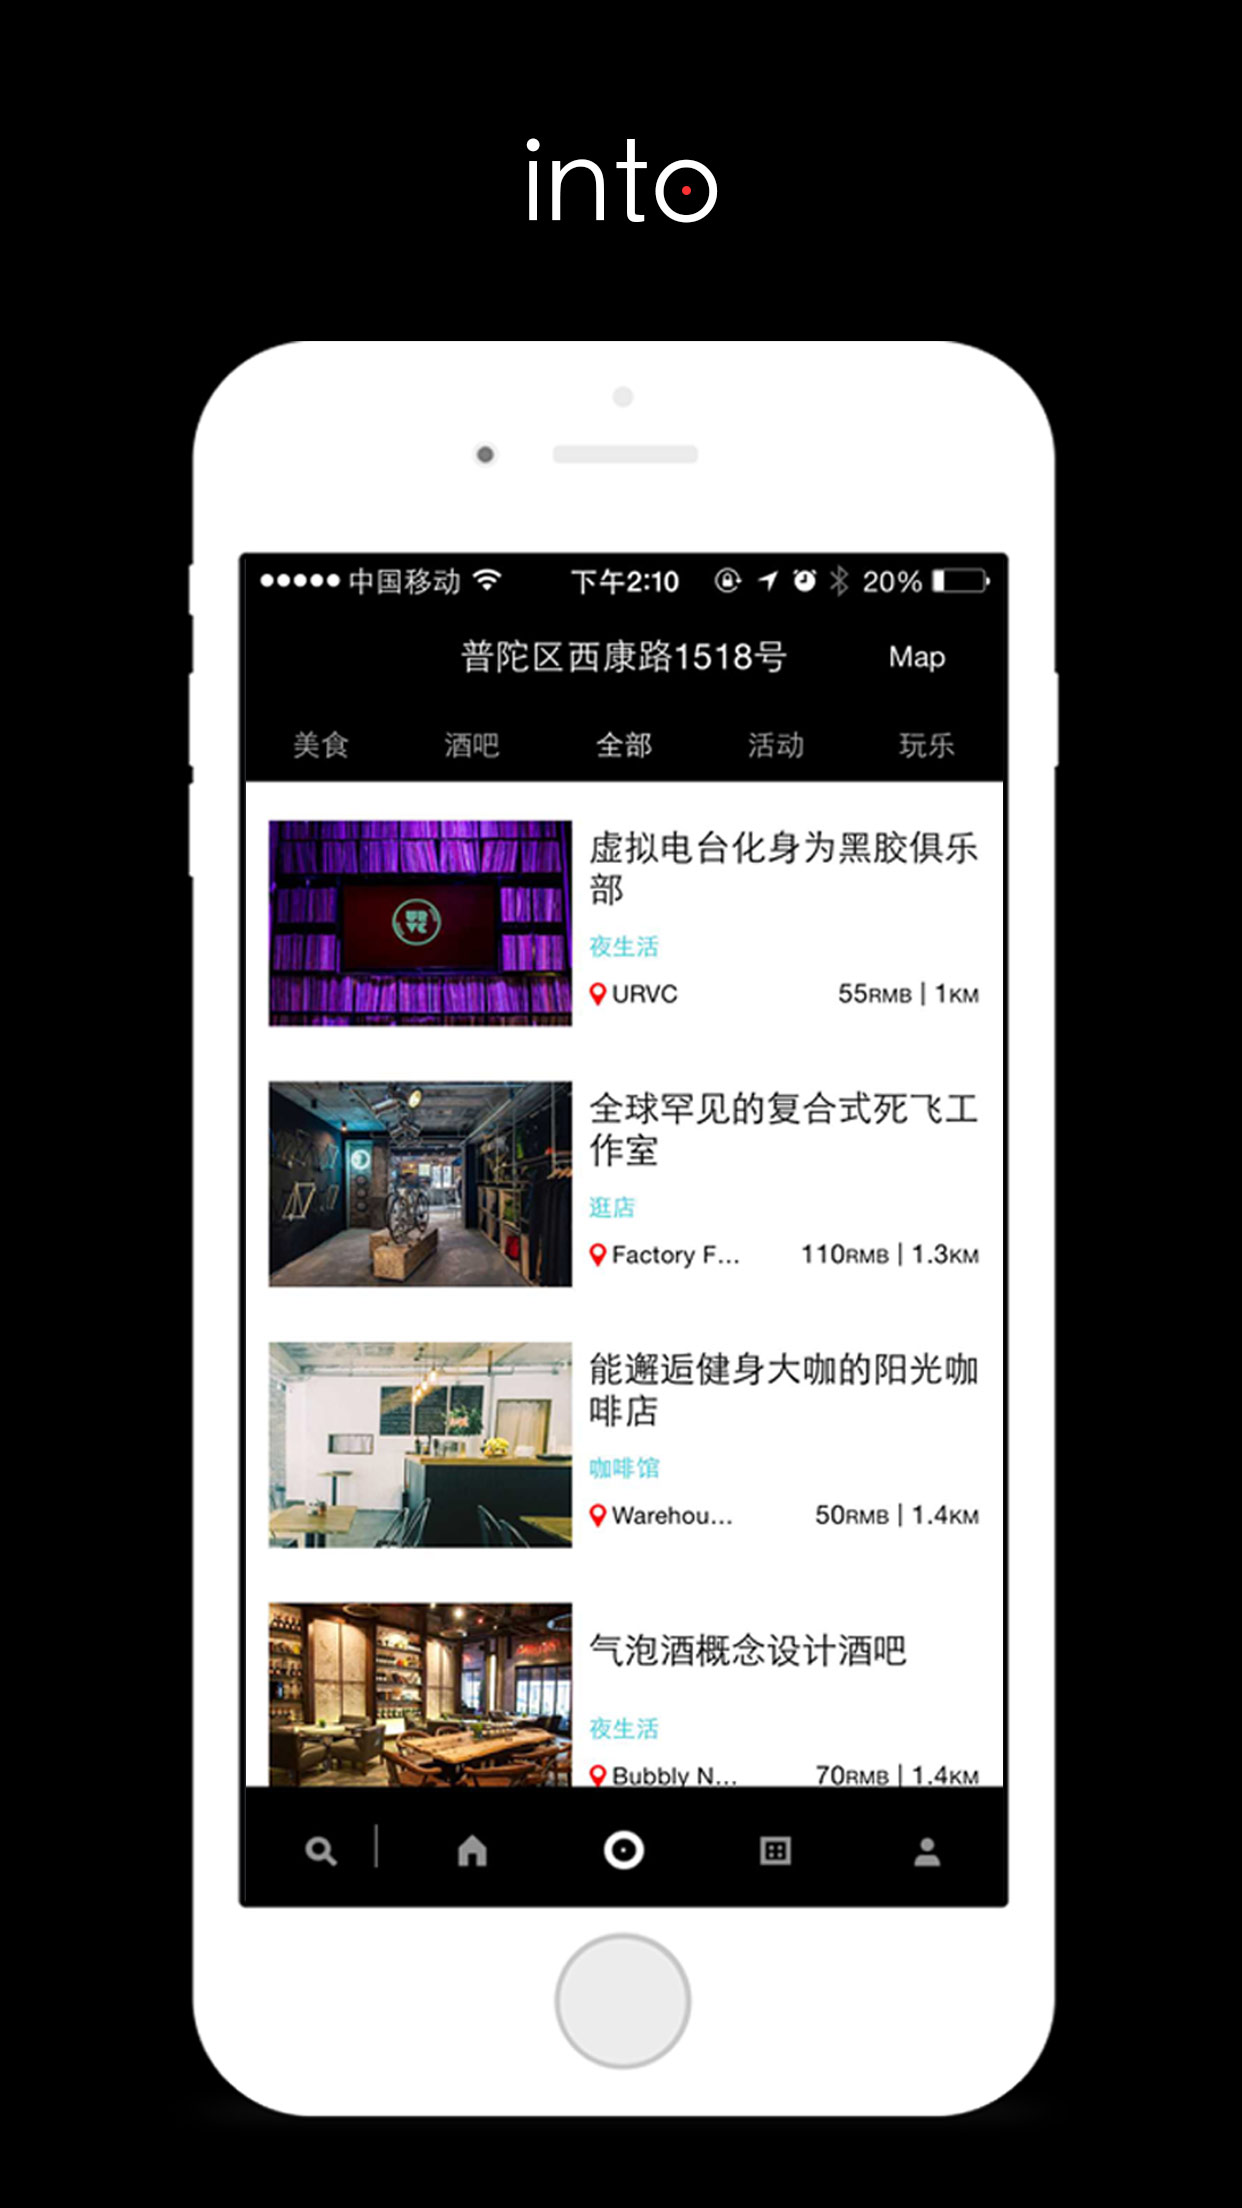 into上海 v2.2.0 安卓版3